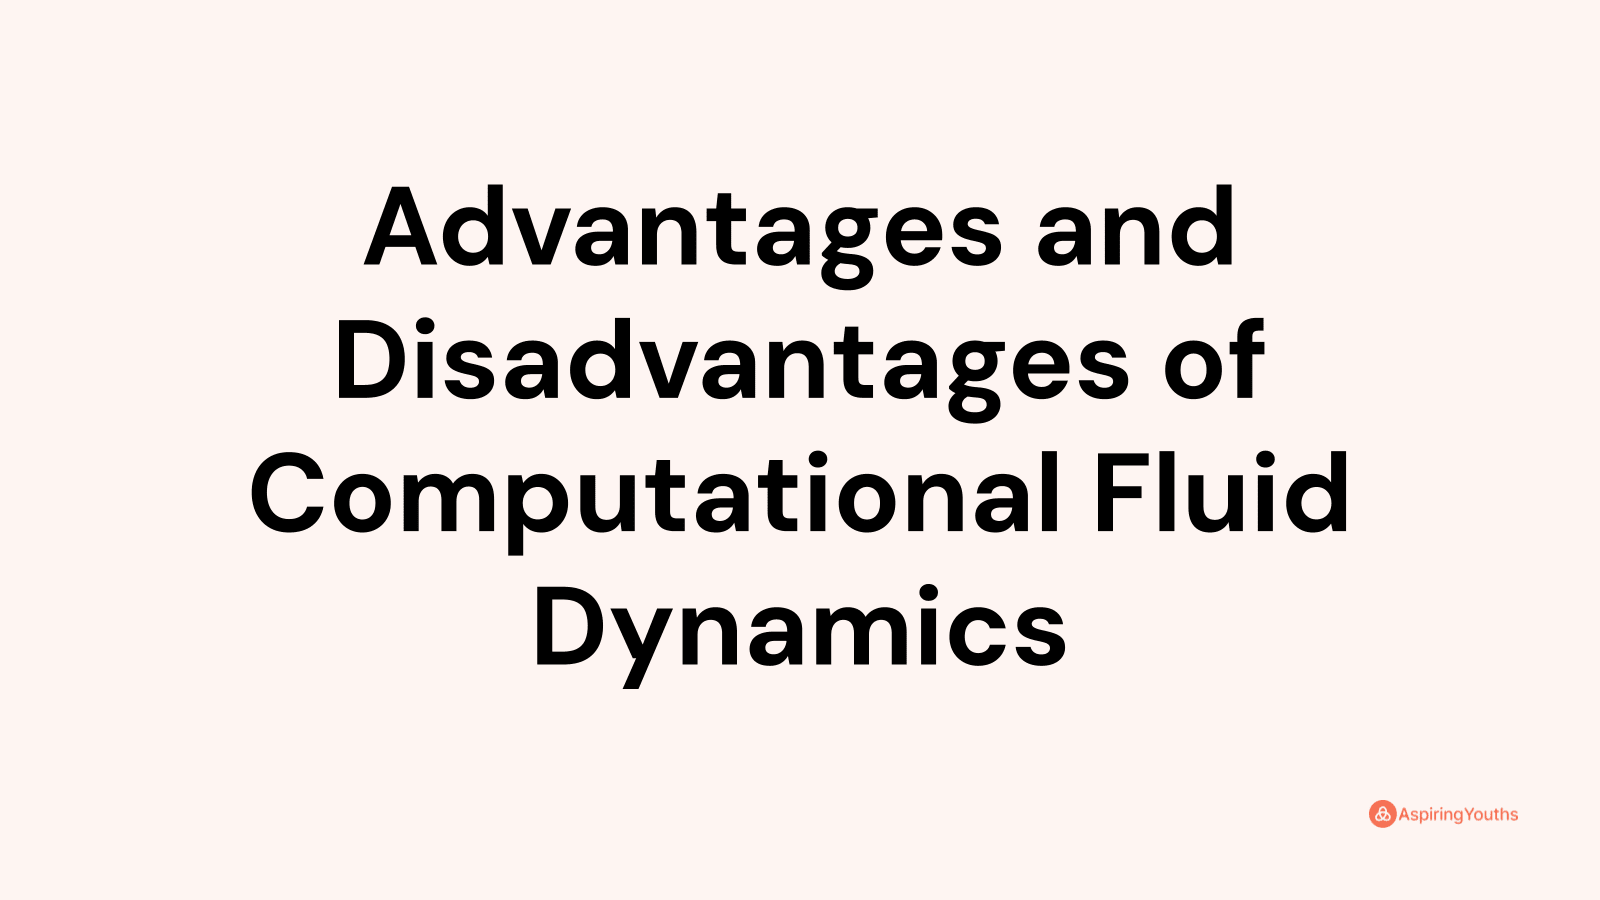 Advantages and disadvantages of Computational Fluid Dynamics